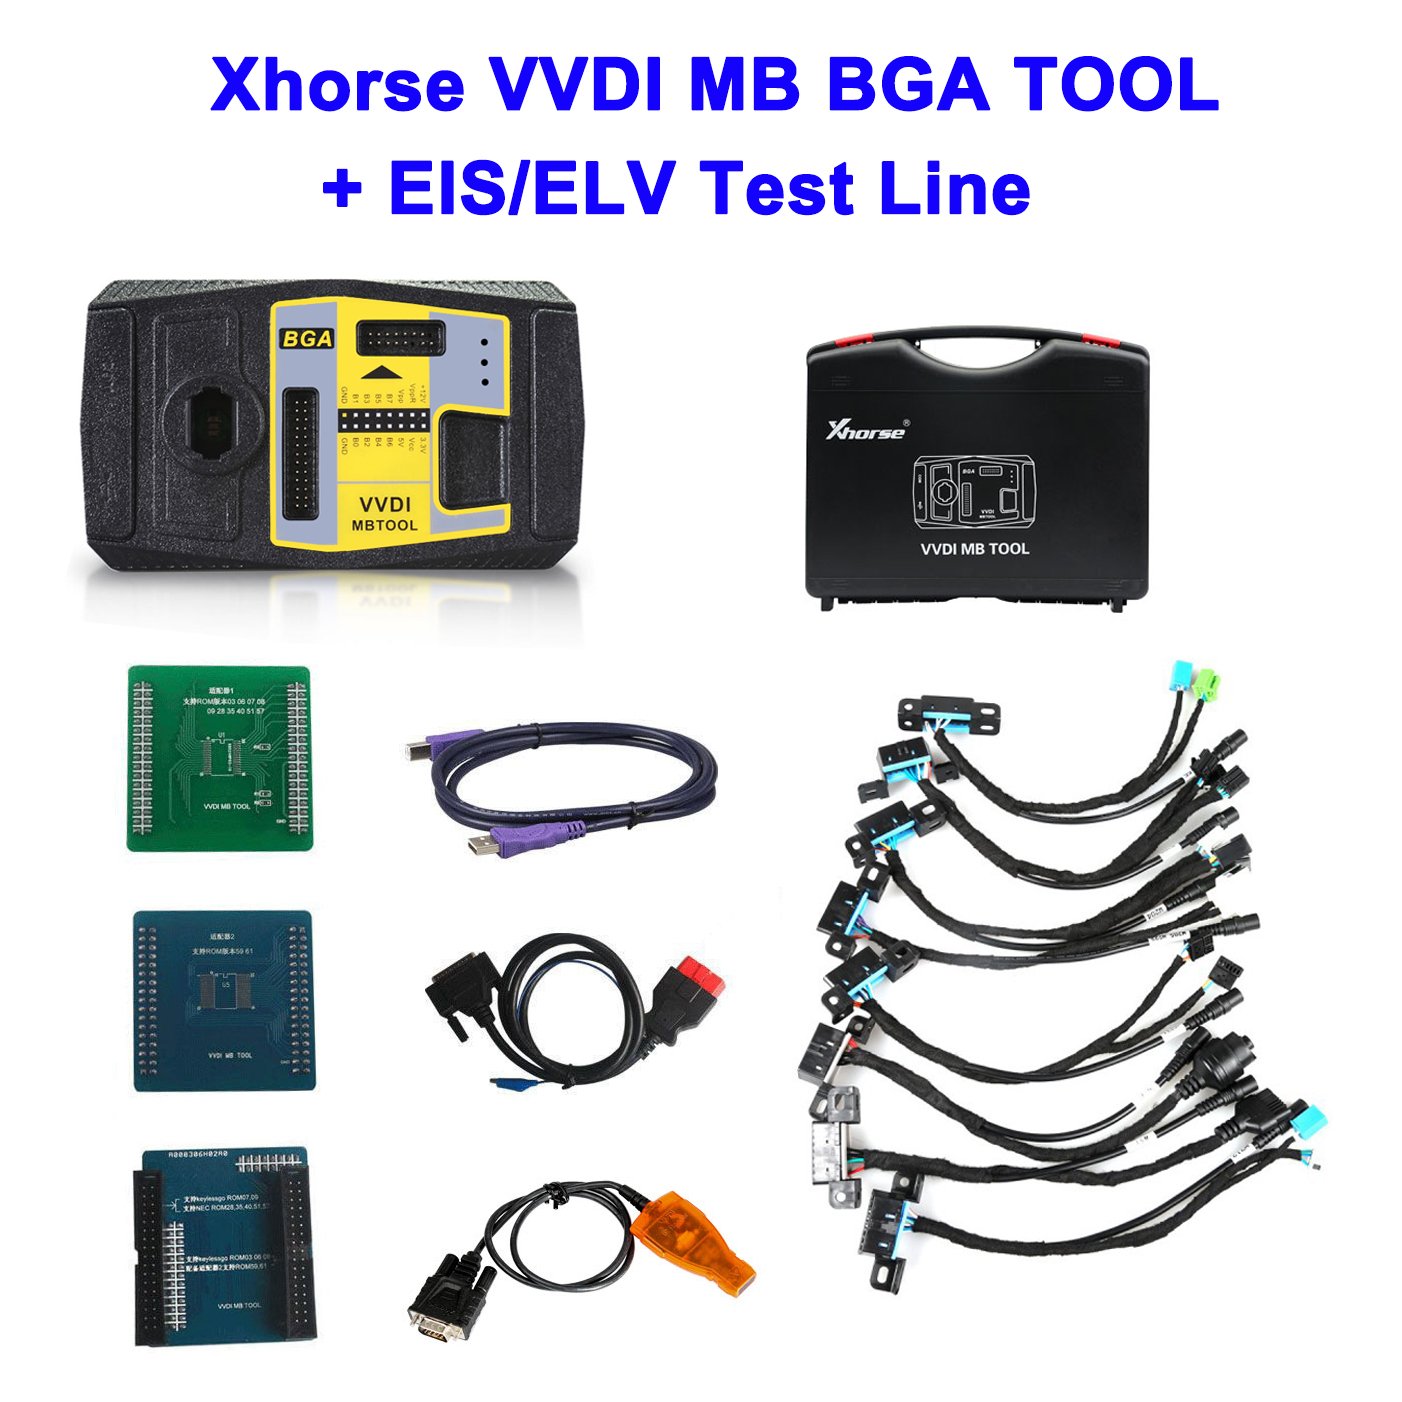 Xhorse VVDI MB TOOL BGA Key Programmer Work with EIS/ELV Test Line for Benz